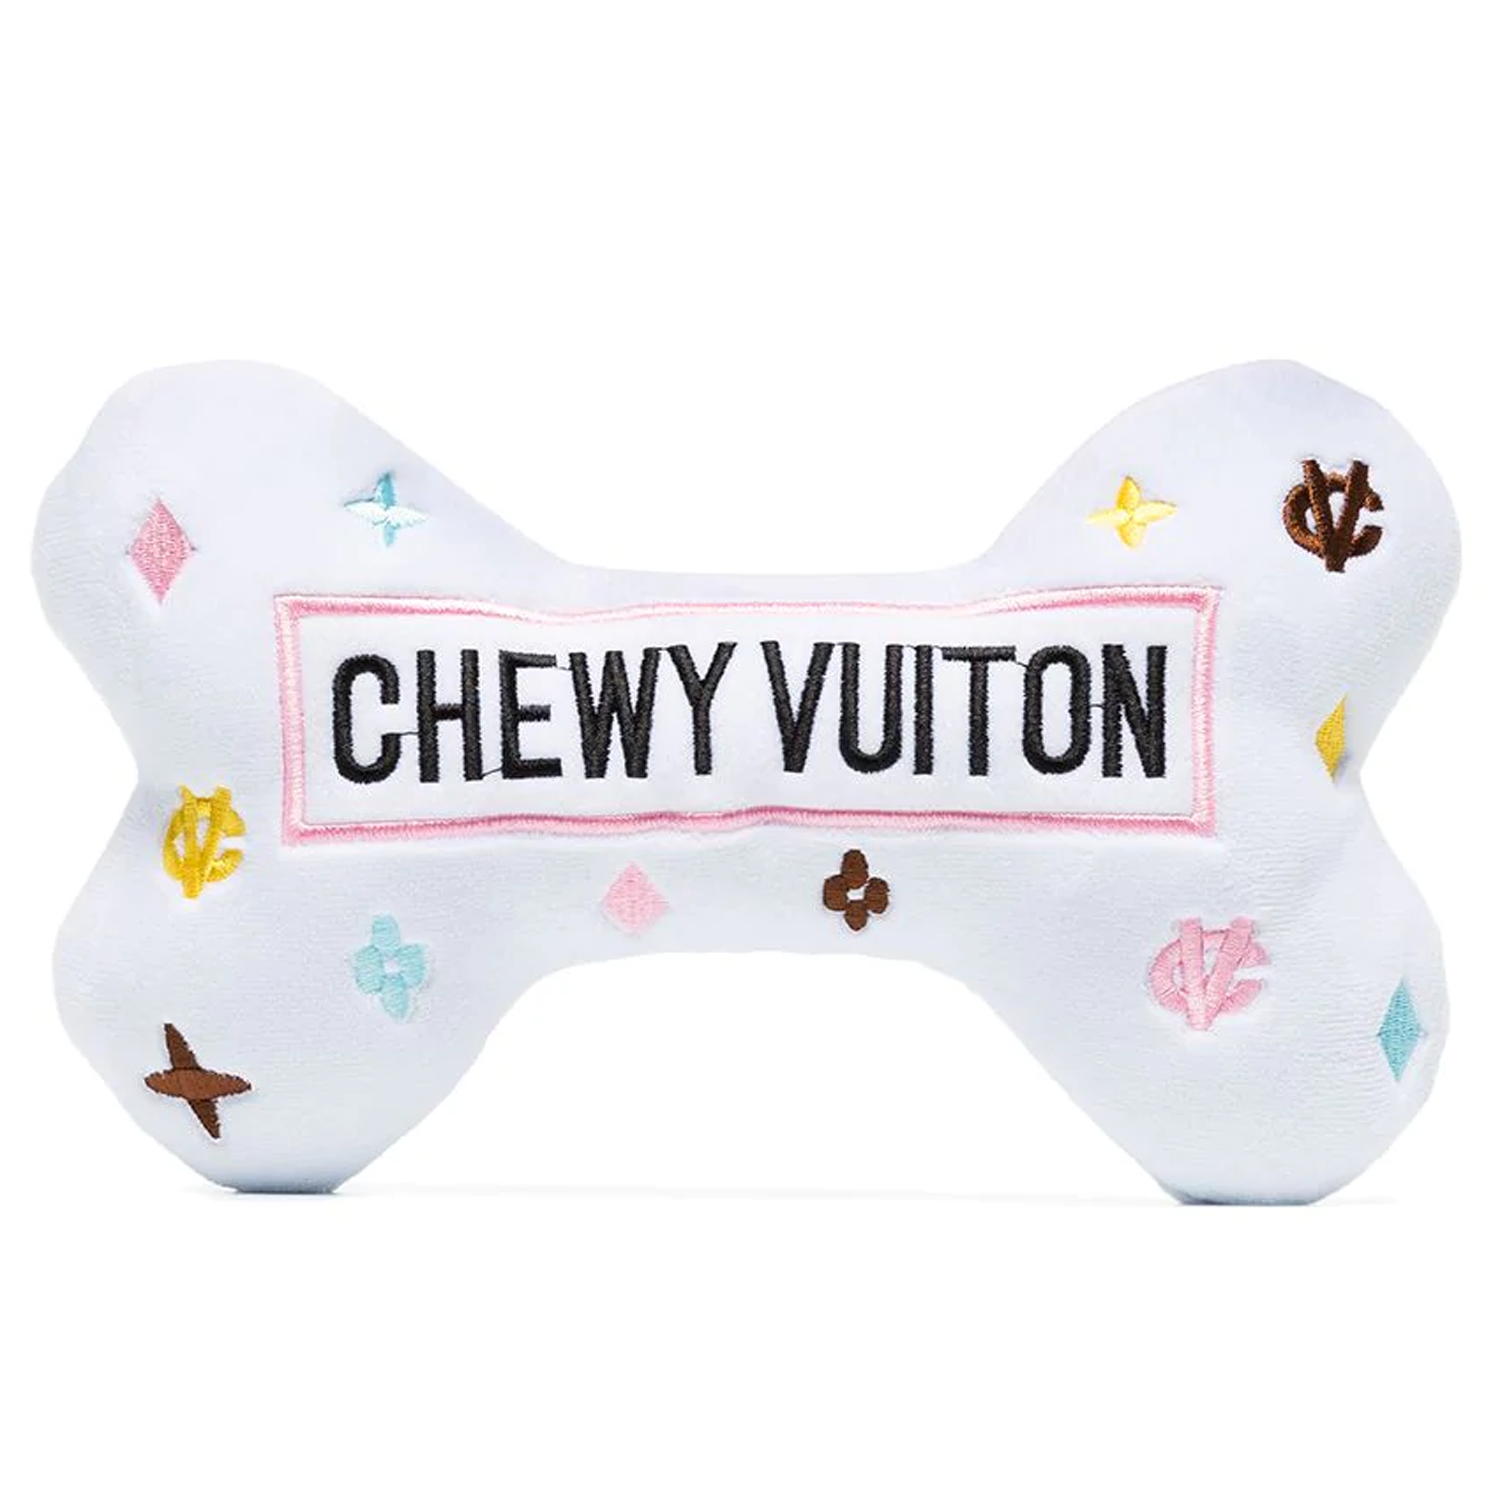 Dog Toy - White Chewy Vuiton Dog Bone Toy by Dog Diggin Designs